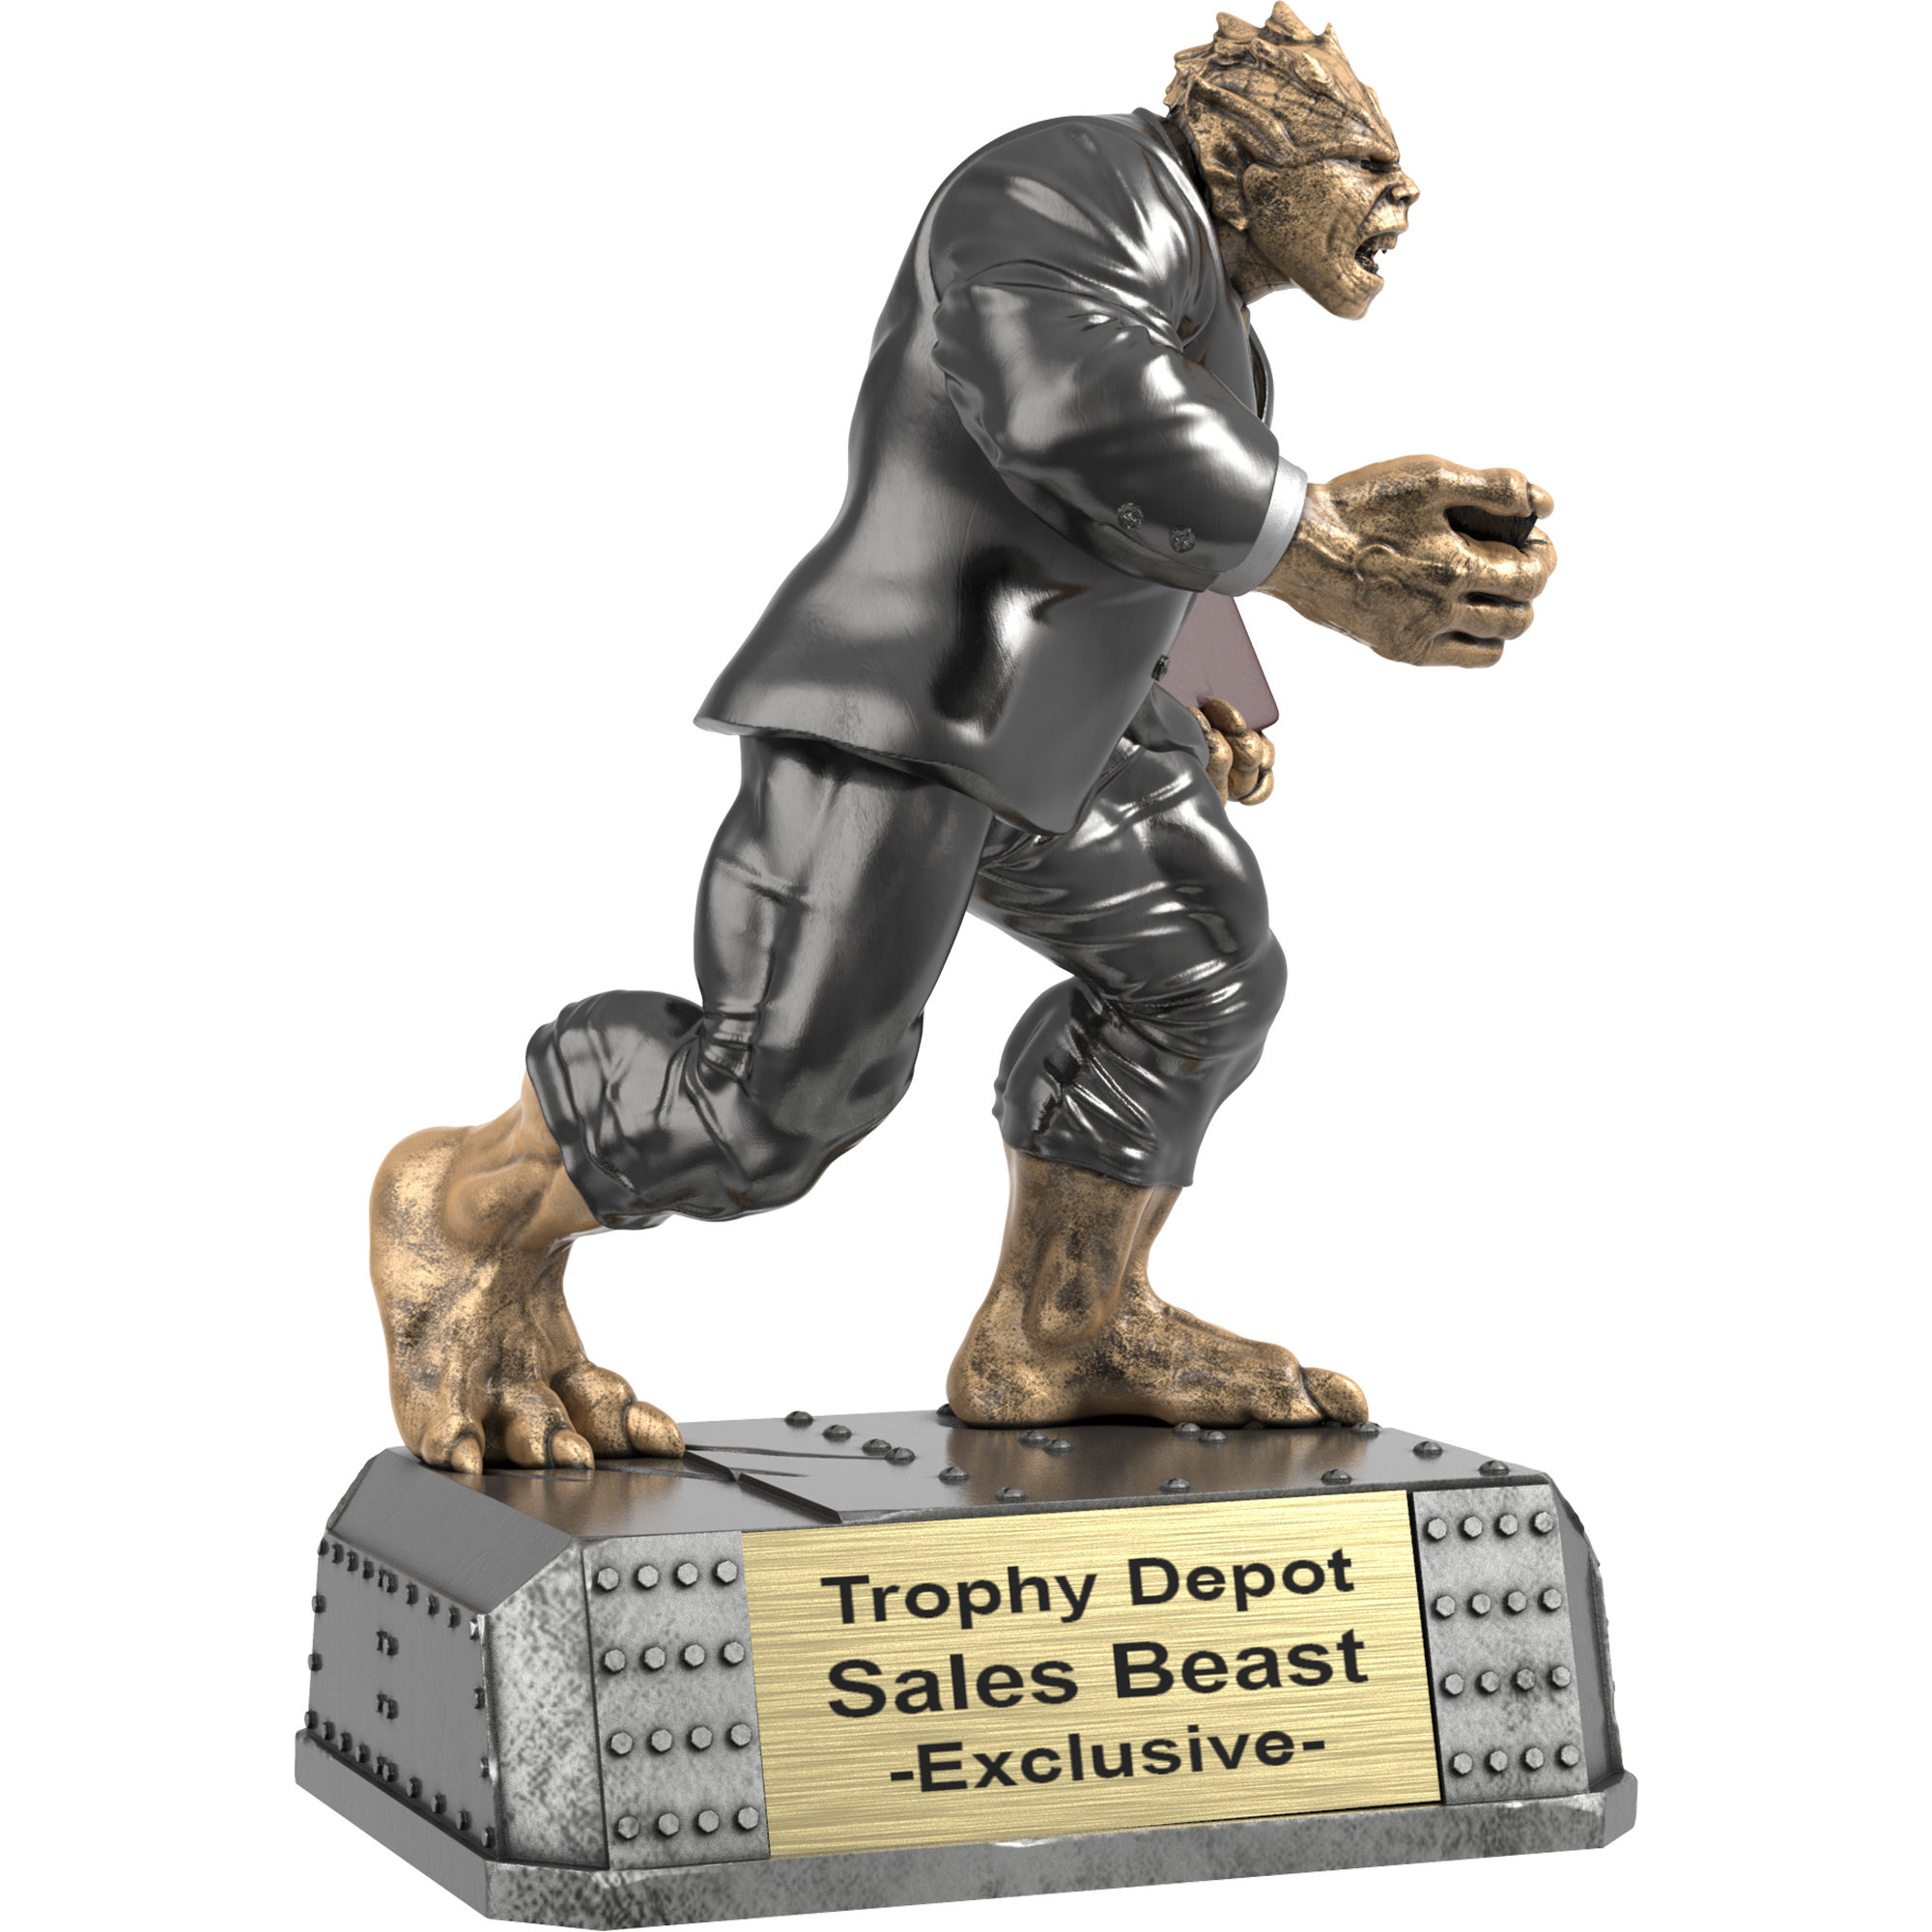 Sales Beast Sculpture Trophy - 9.25 inch